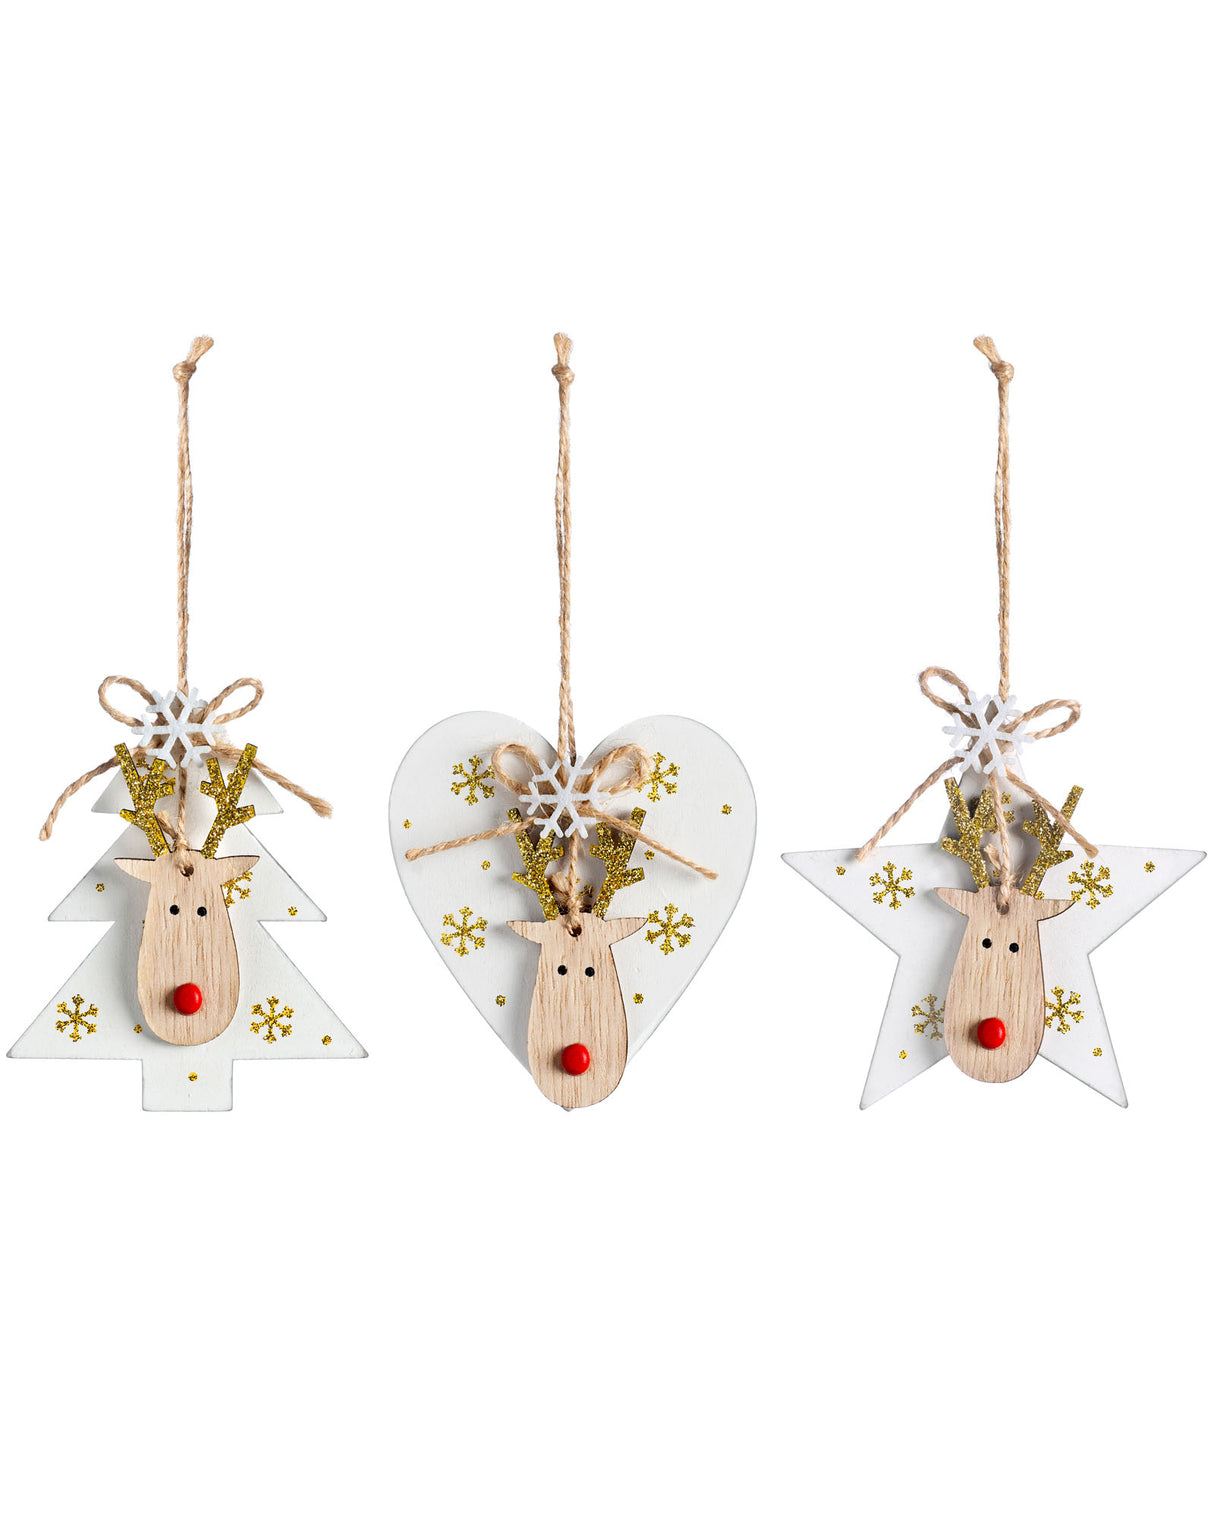 Set of 6 Hanging Christmas Decorations 9cm, White